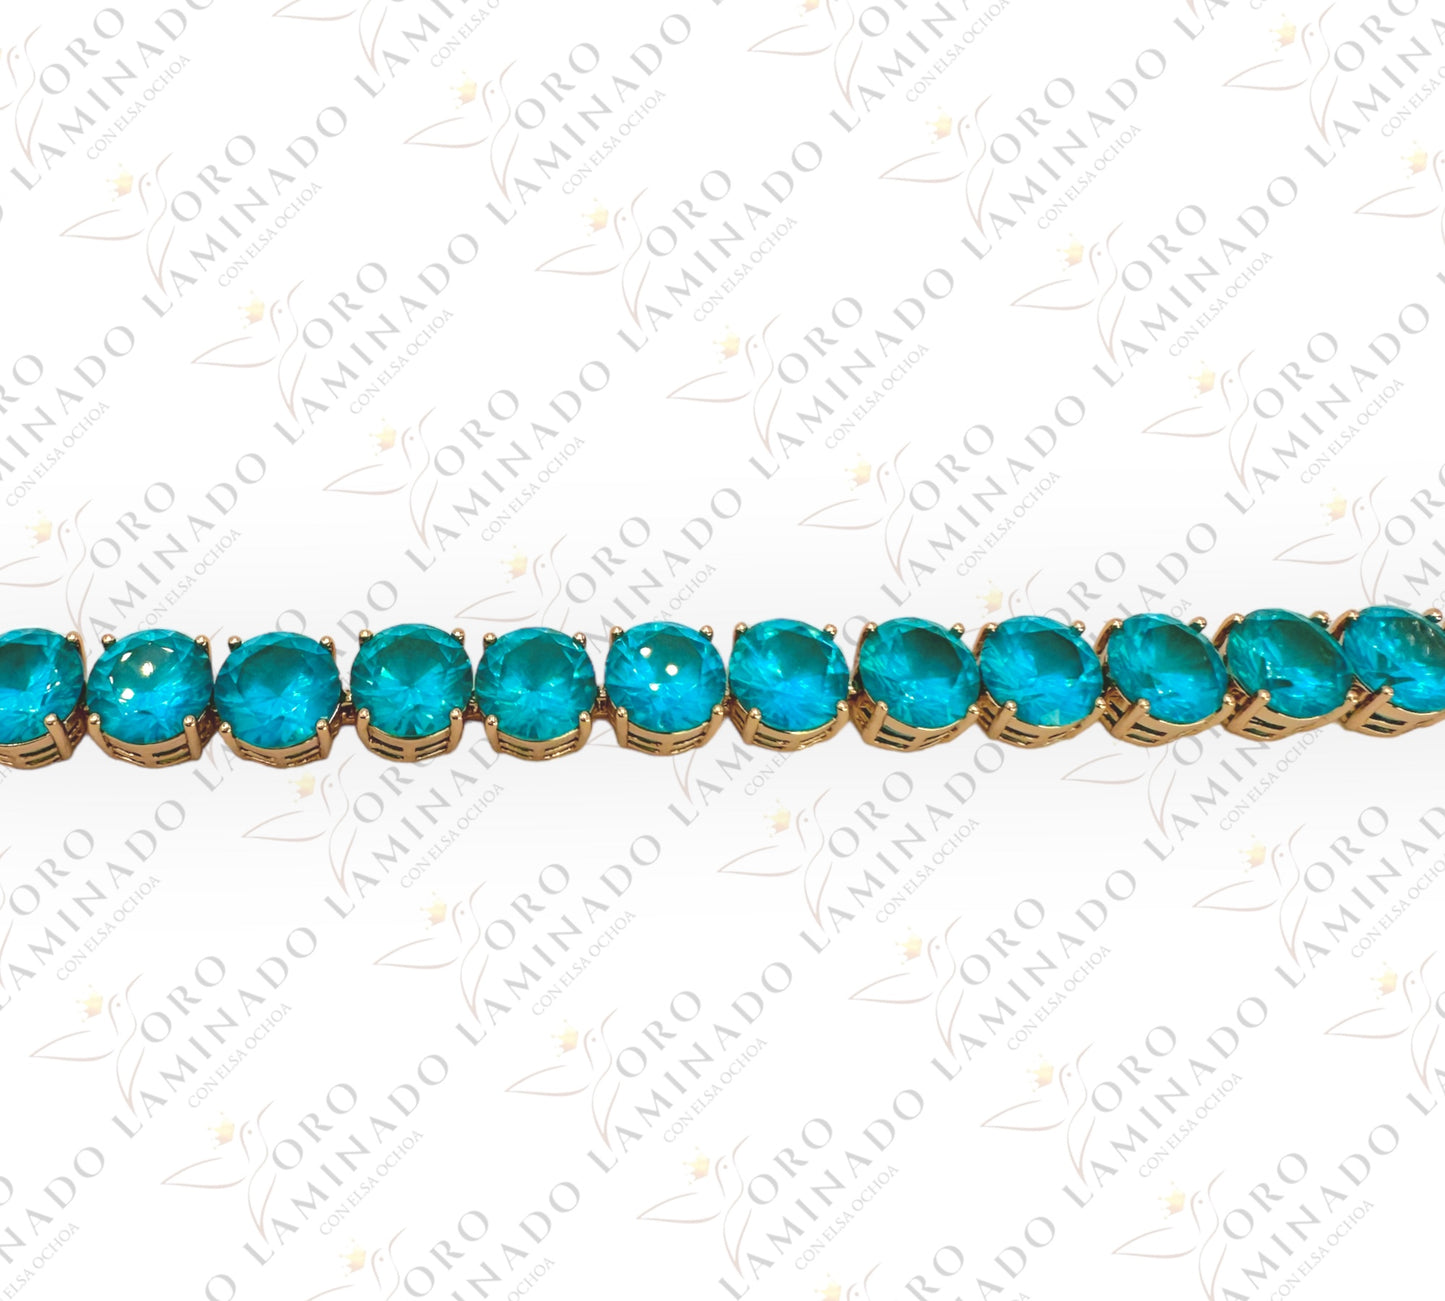 High Quality Bracelet with light blue stones G273